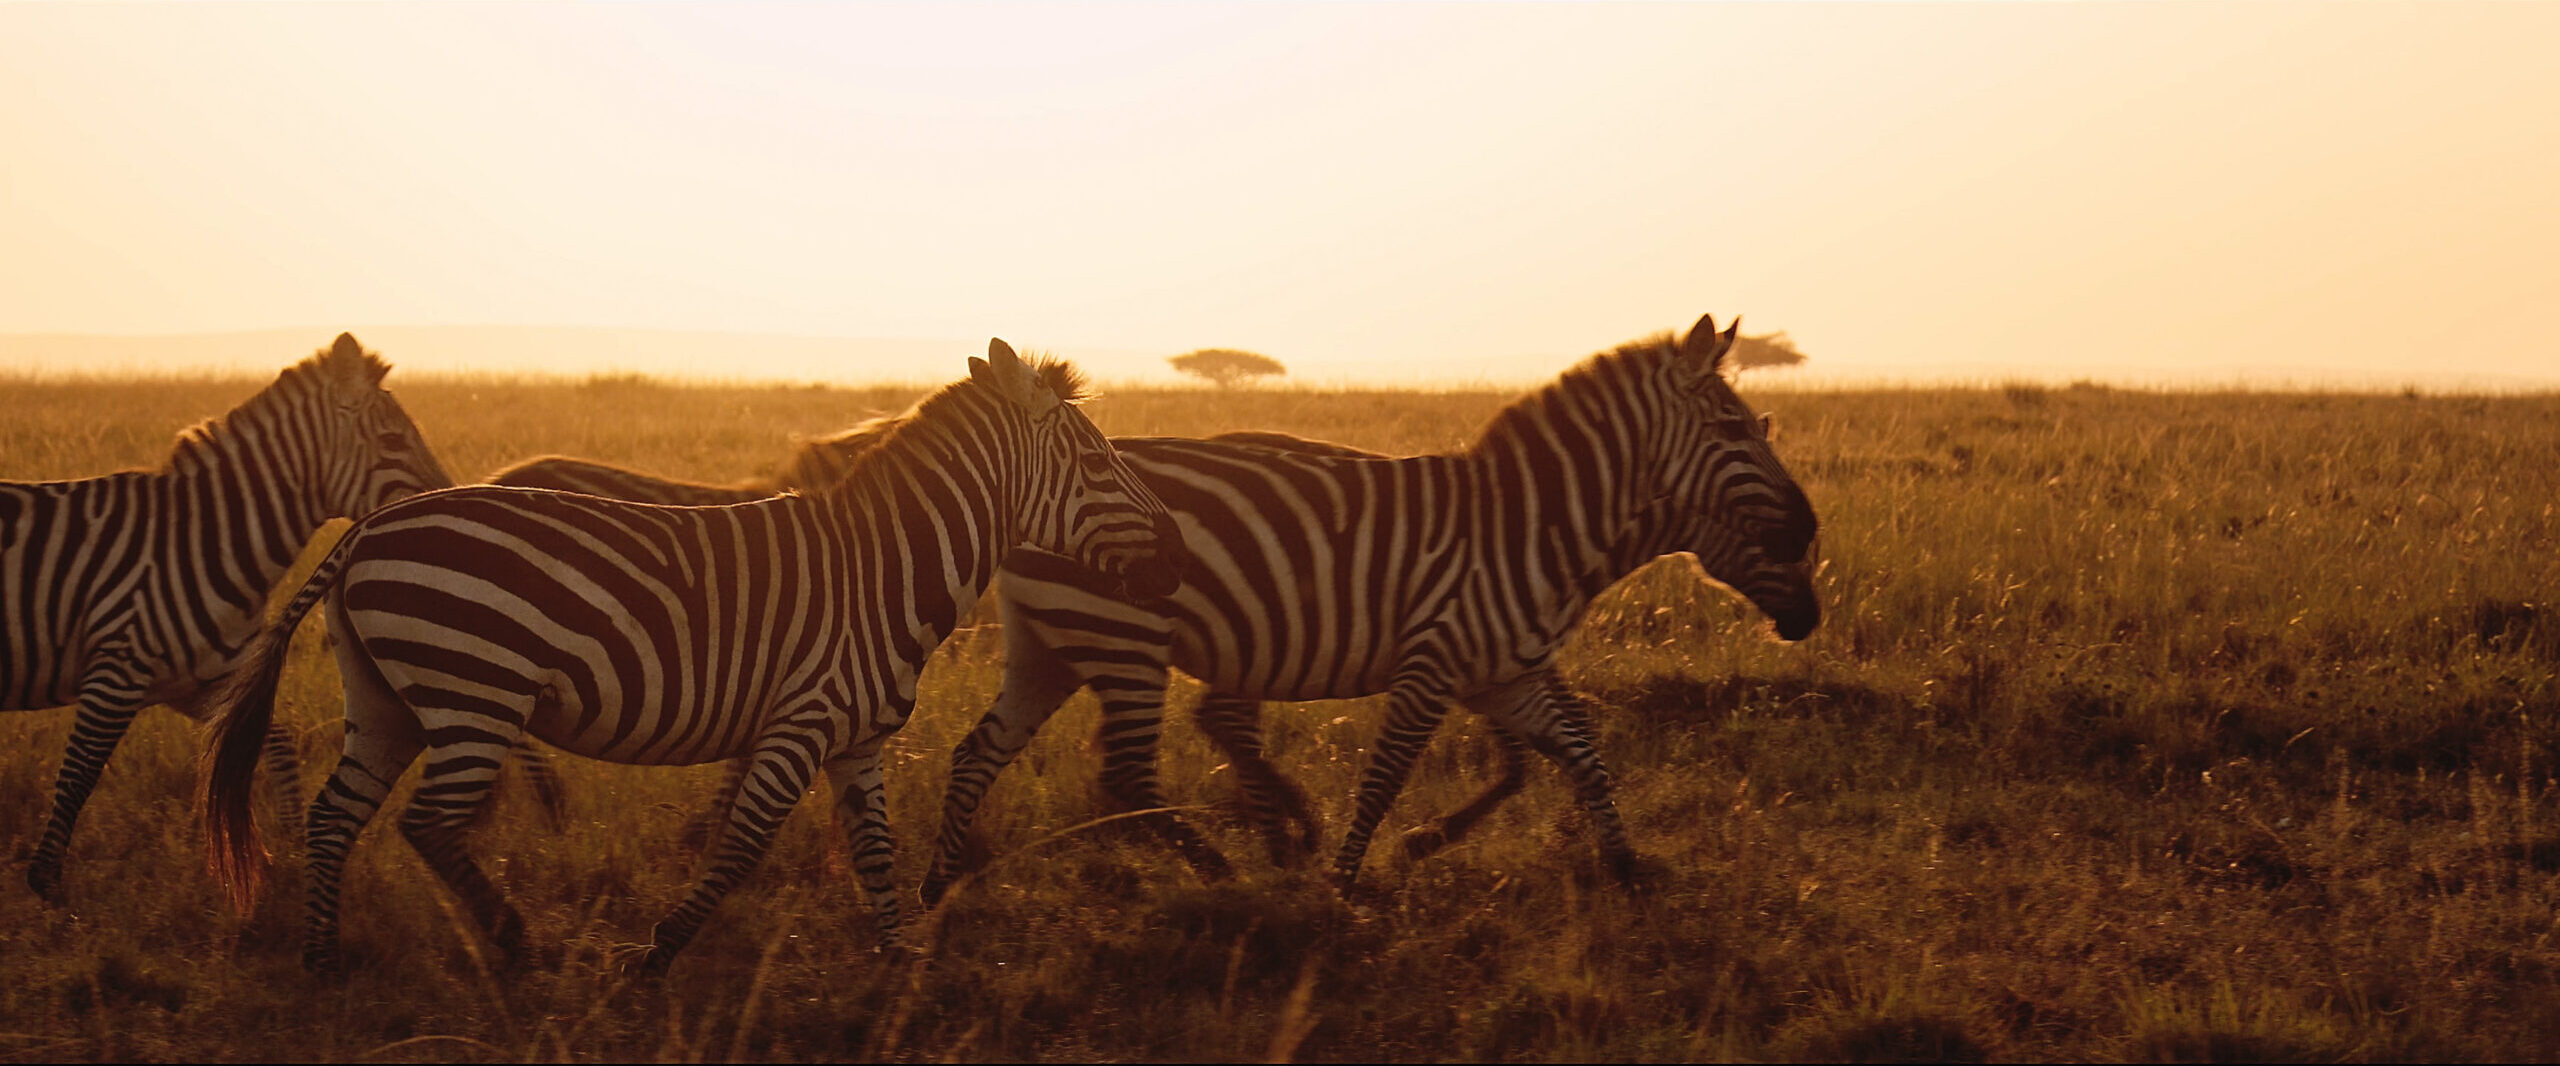 Zebras walking in grassland